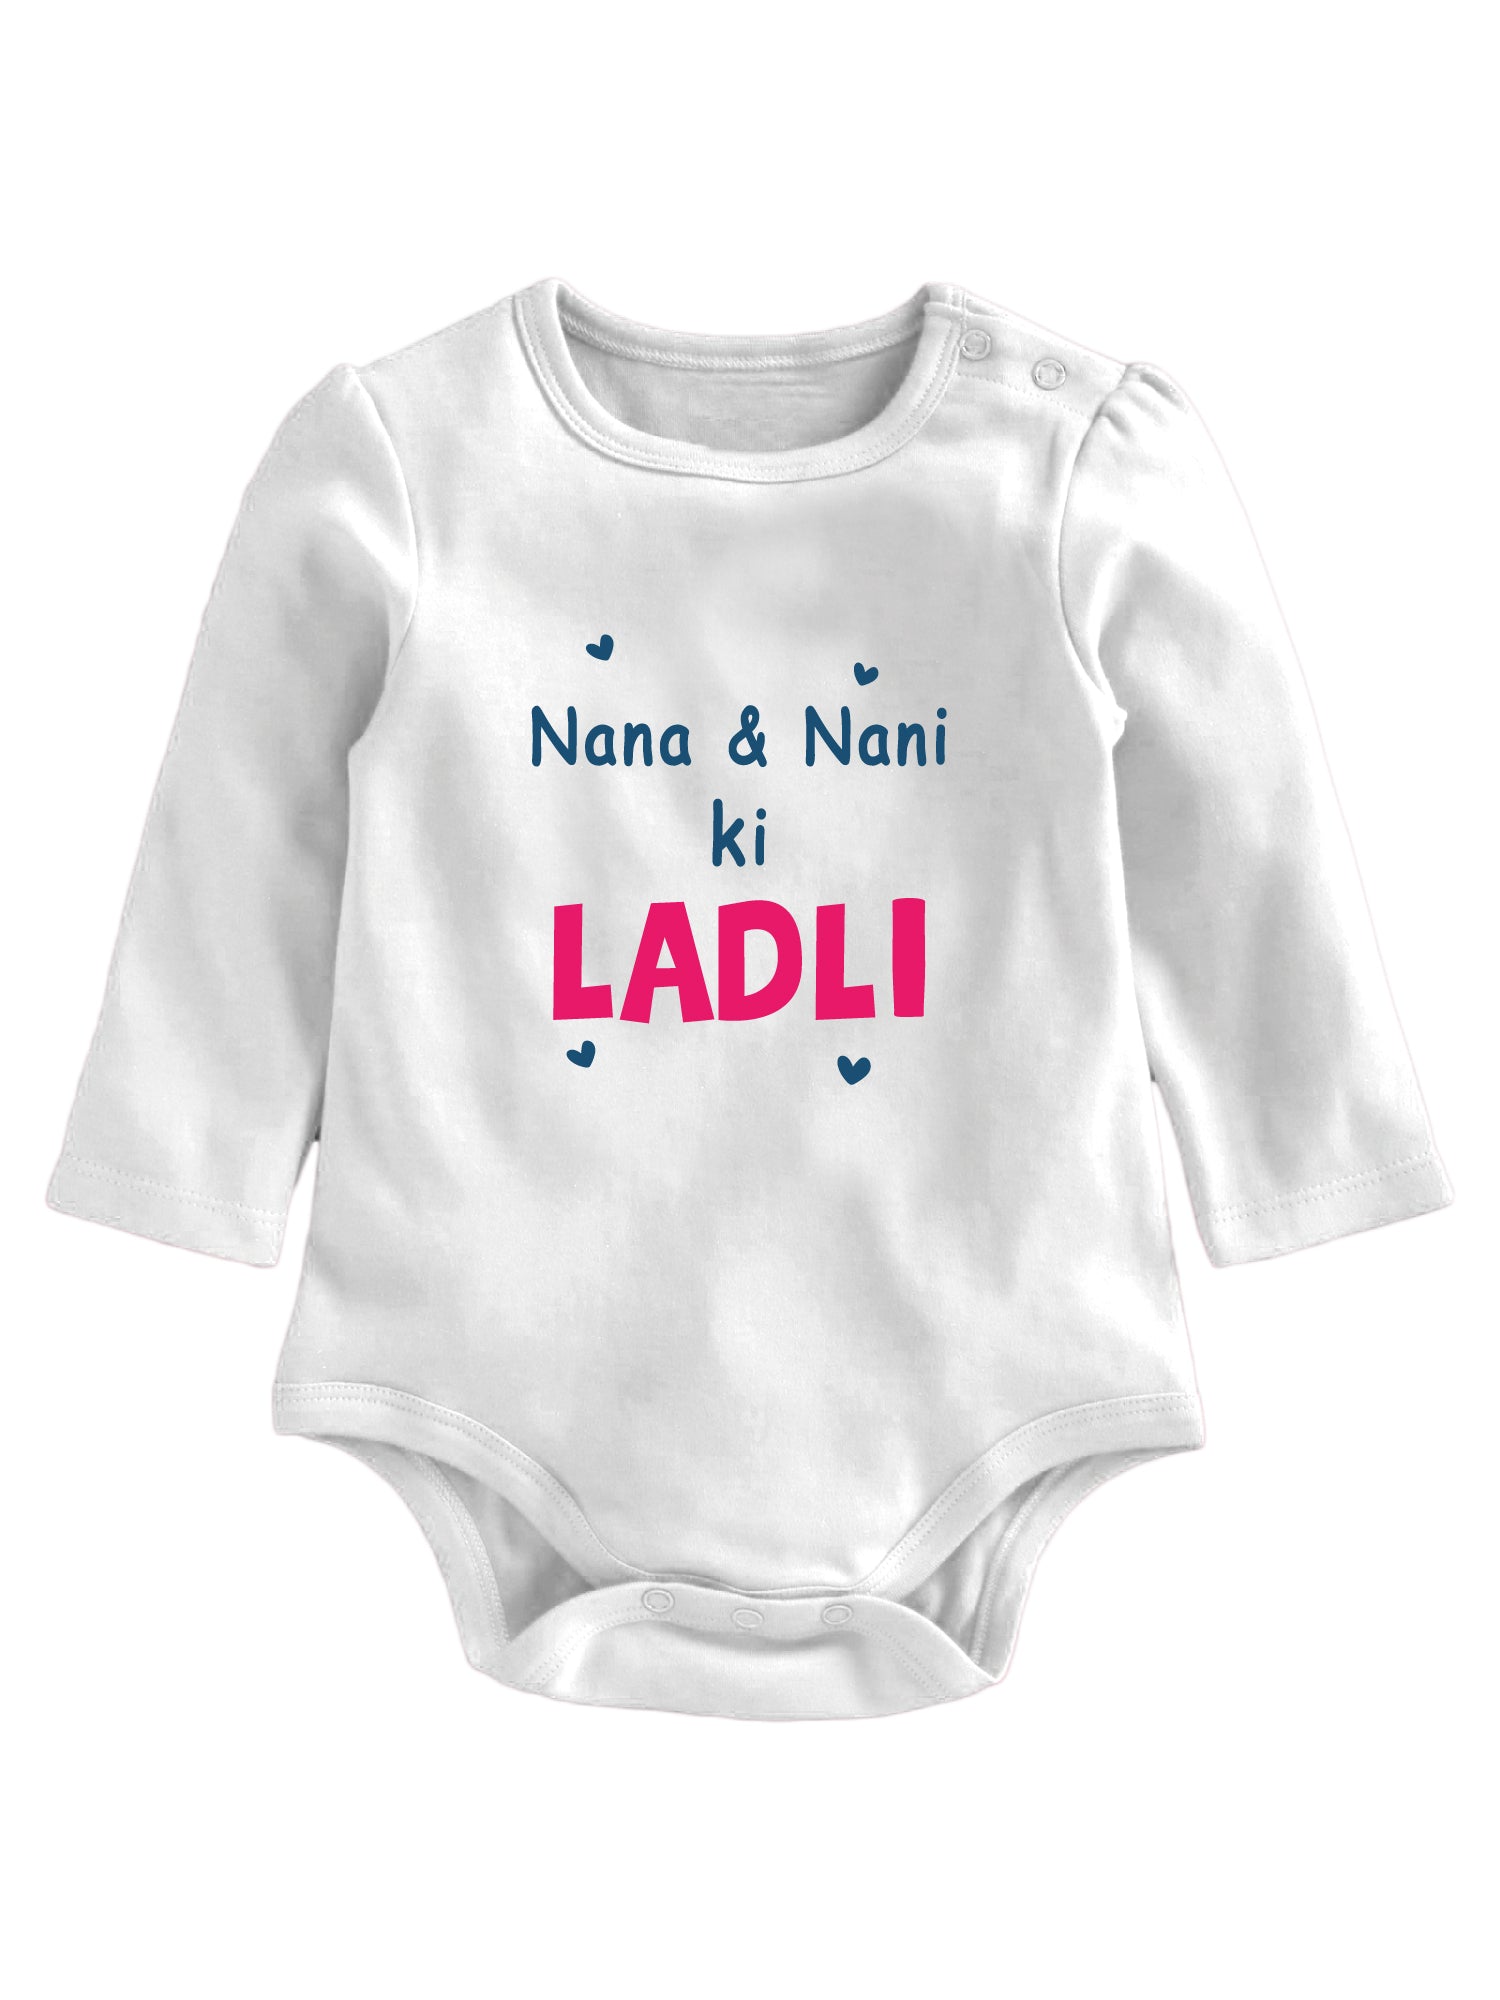 Nana and Nani Ki Ladli - Onesie